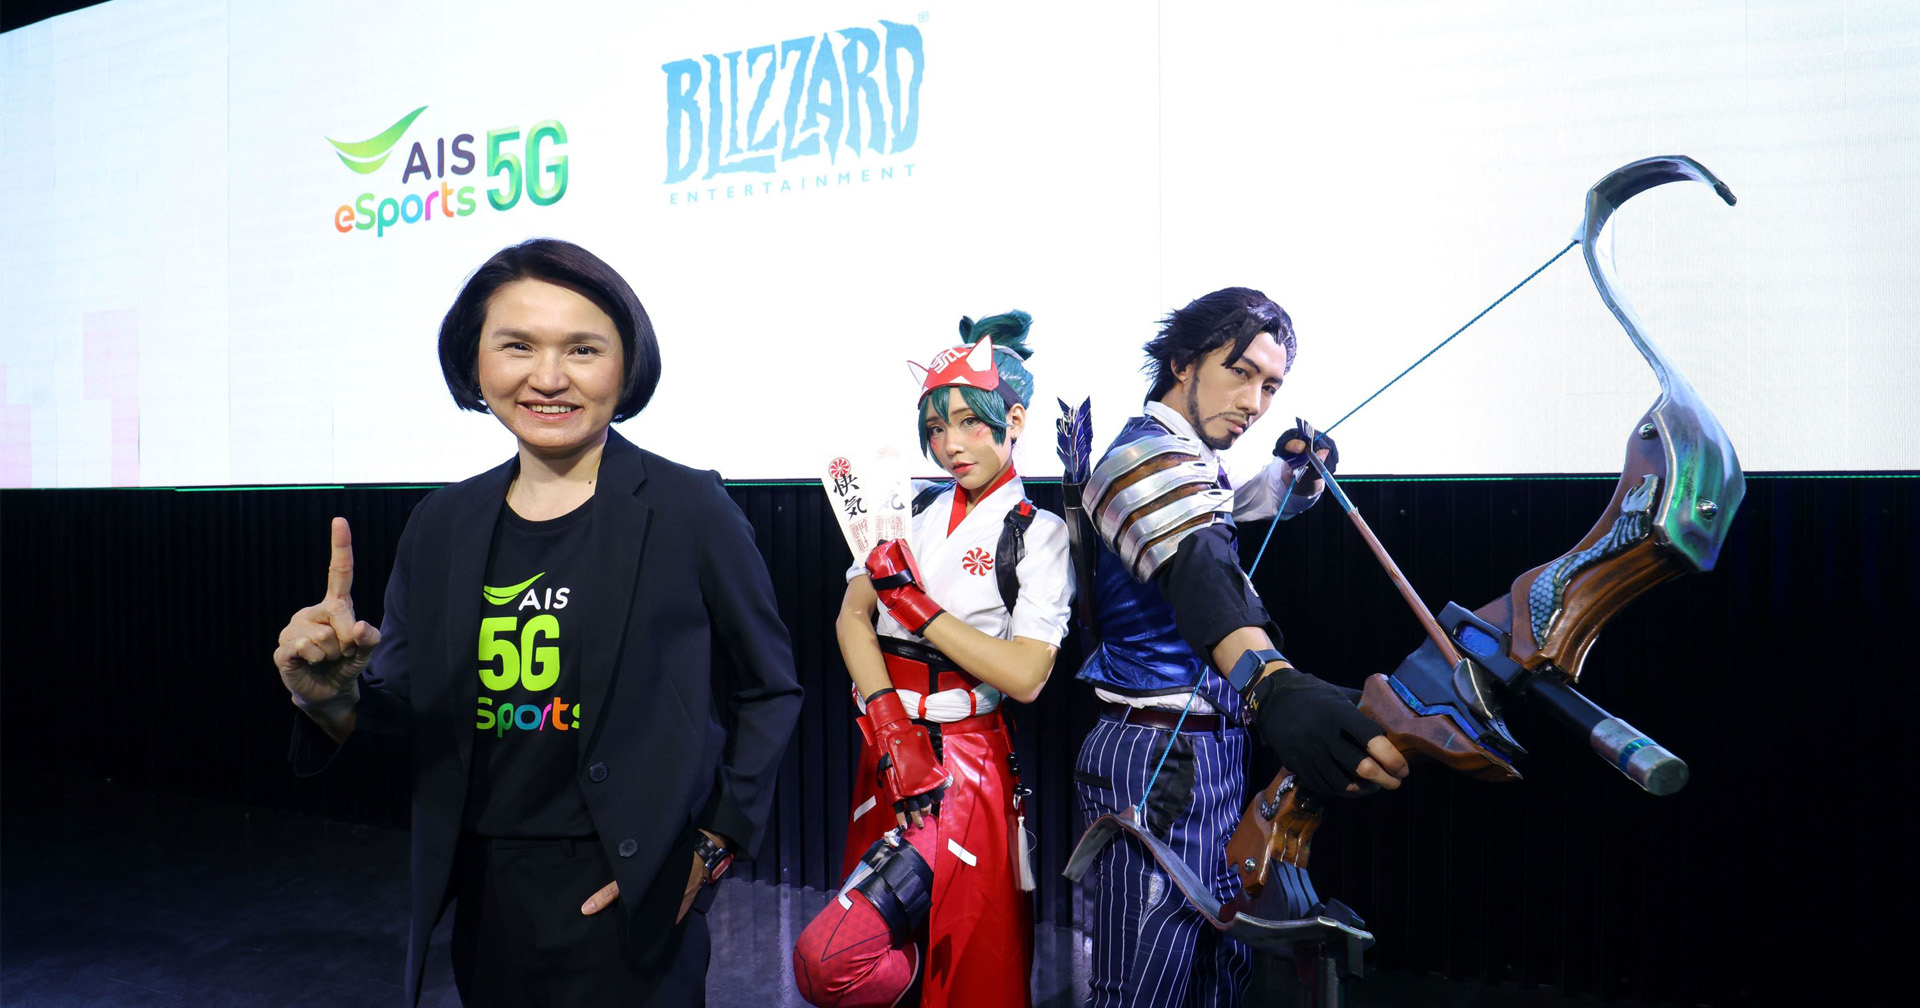 AIS ผนึก Blizzard Entertainment ร่วมยกระดับวงการอีสปอร์ตไทย ตั้งเป้าสร้างคอมมูนิตี้เกมเมอร์ พร้อมเปิดสังเวียนอีสปอร์ตสุดยิ่งใหญ่